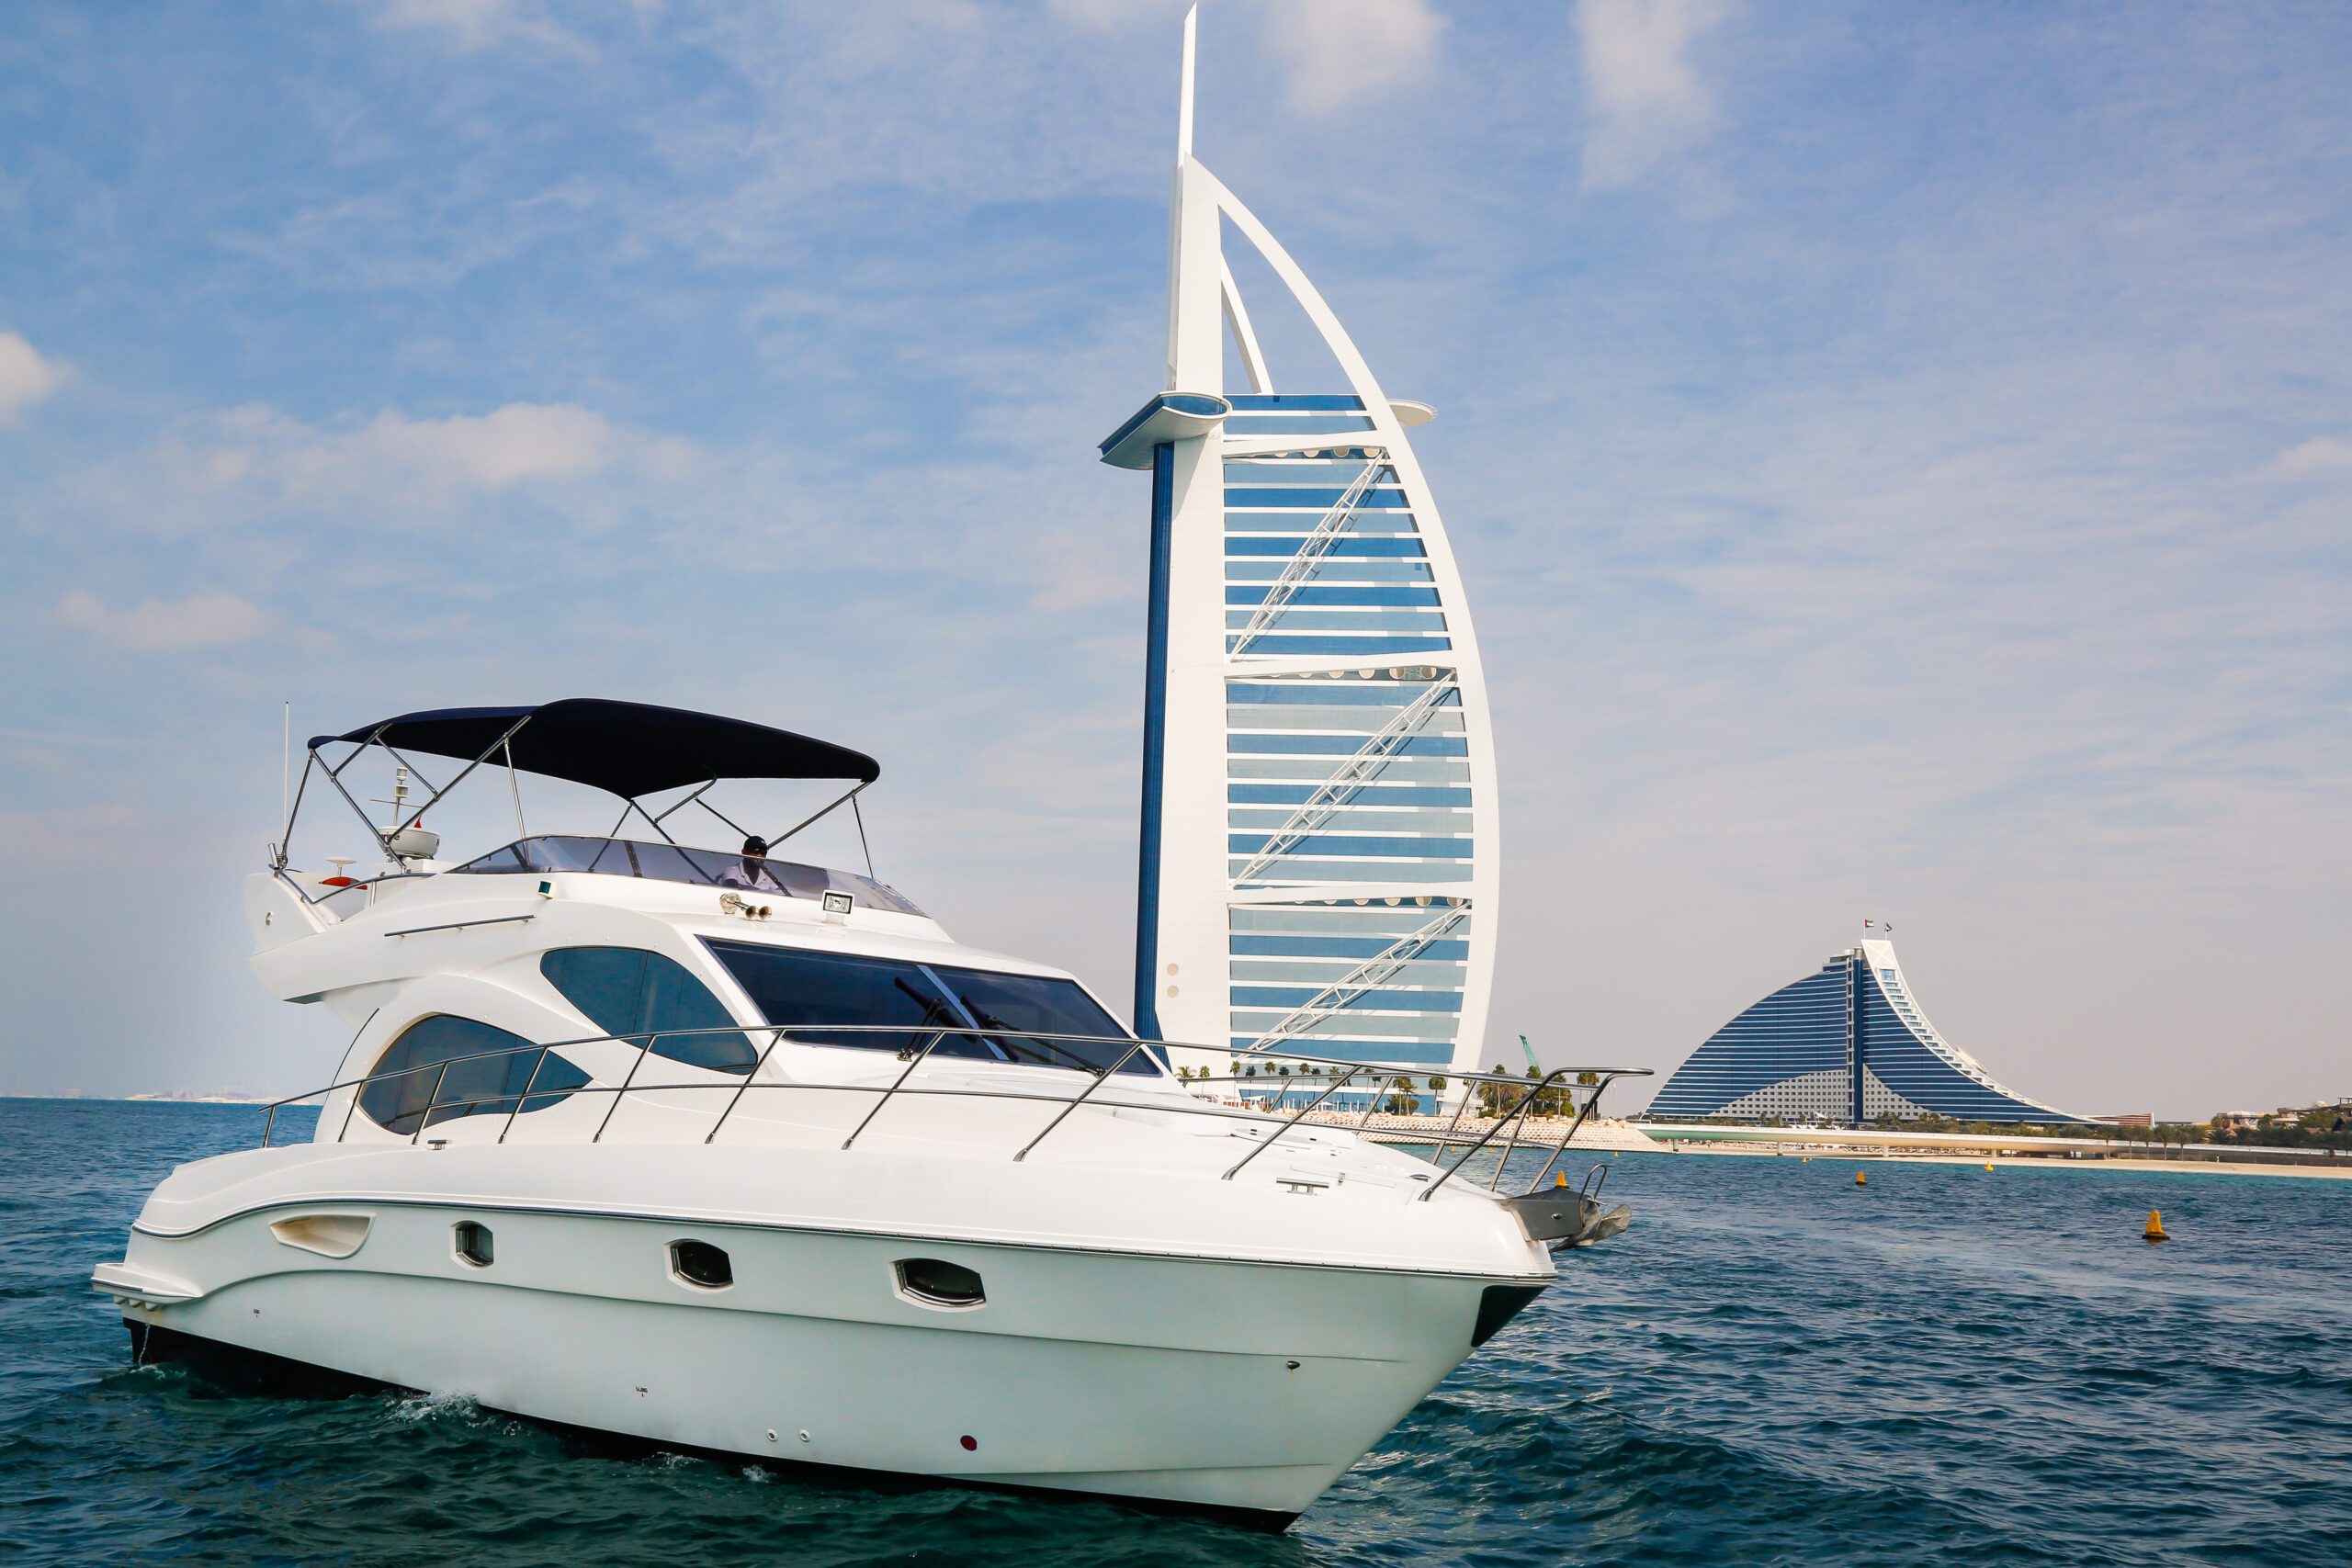 Explorer Goldeon Poseidon 44 ft. yacht with best price in Dubai